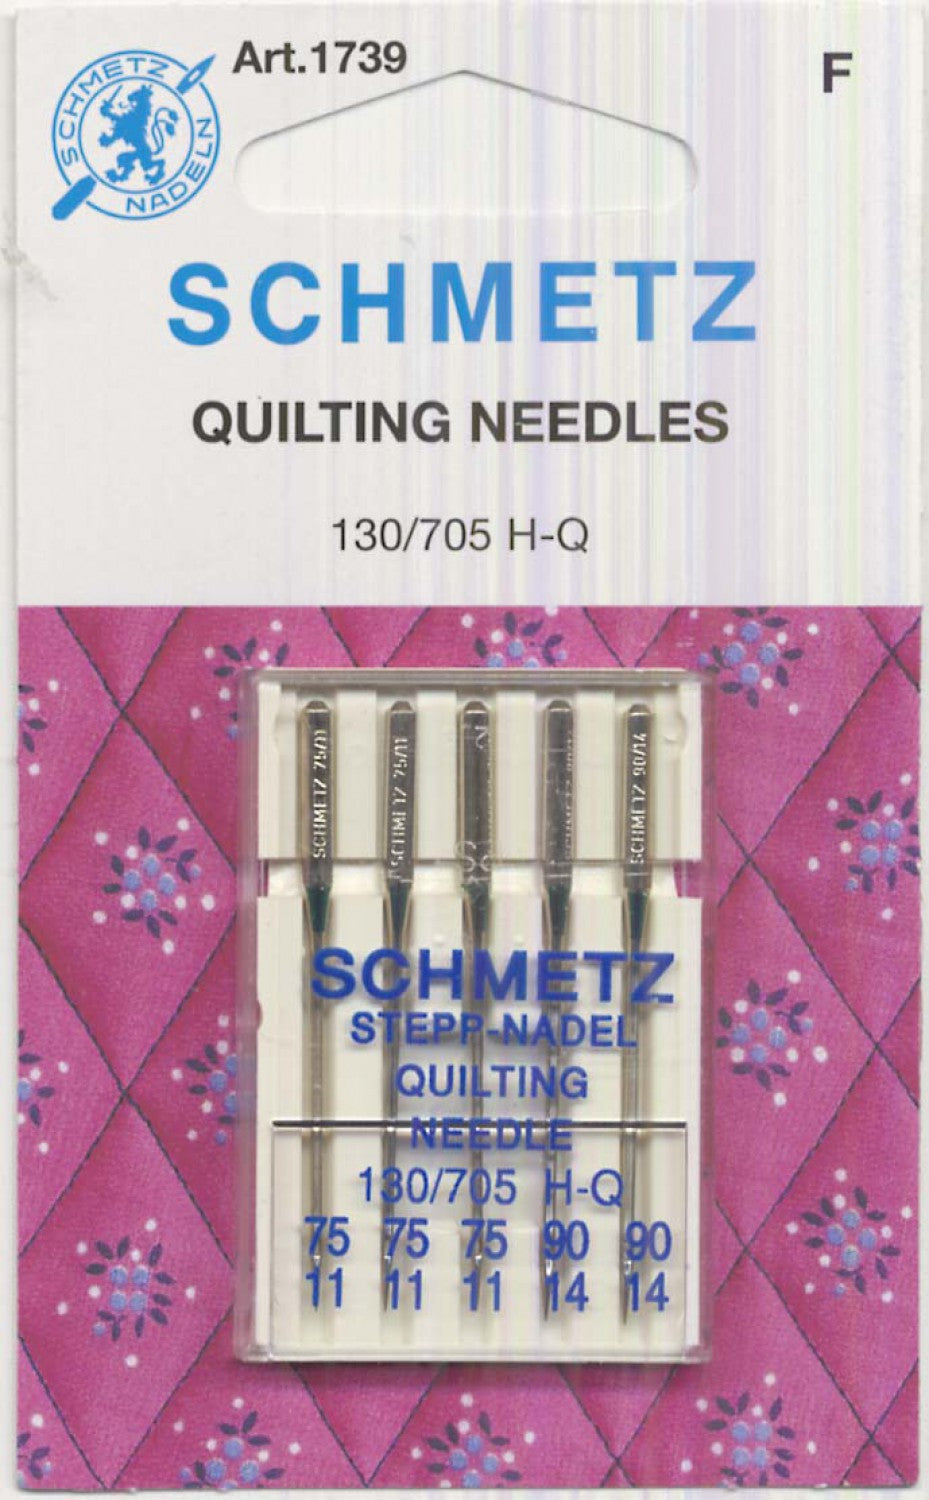 Schmetz Quilting Needle - 75/11 & 90/14 - 1 Package of 5 Needles